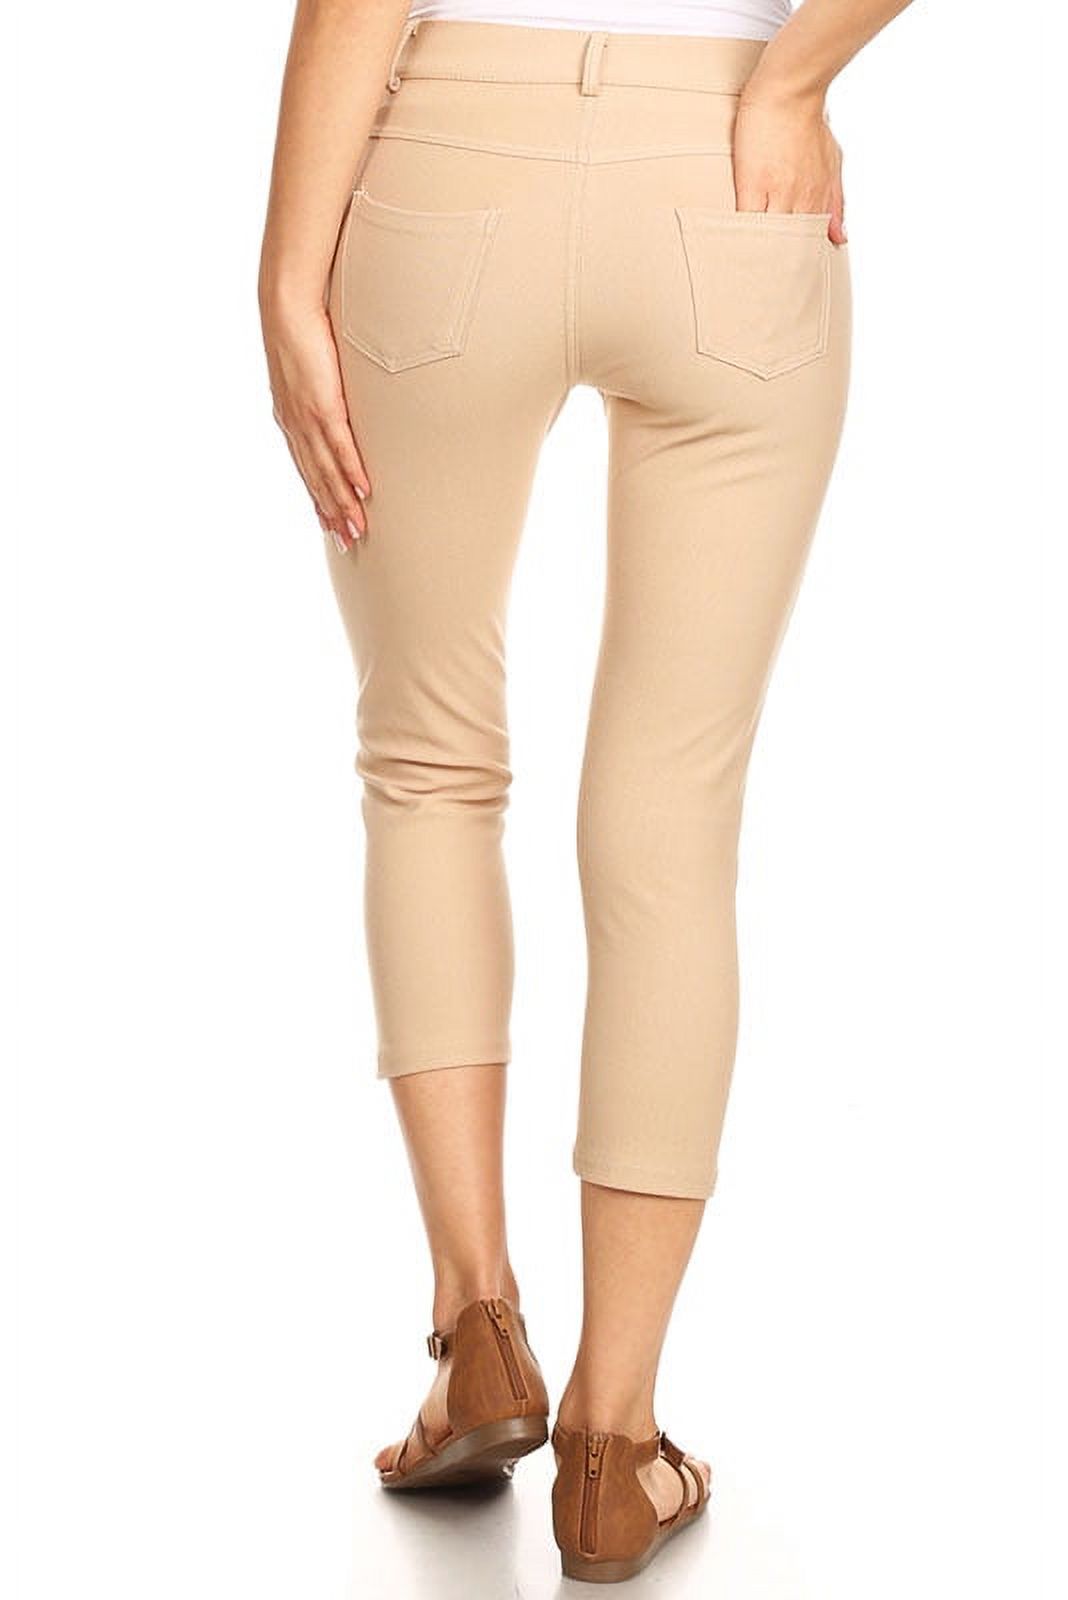 Women's Cotton Blend Capri Jeggings Stretchy Skinny Pants Jeans Leggings - image 3 of 3